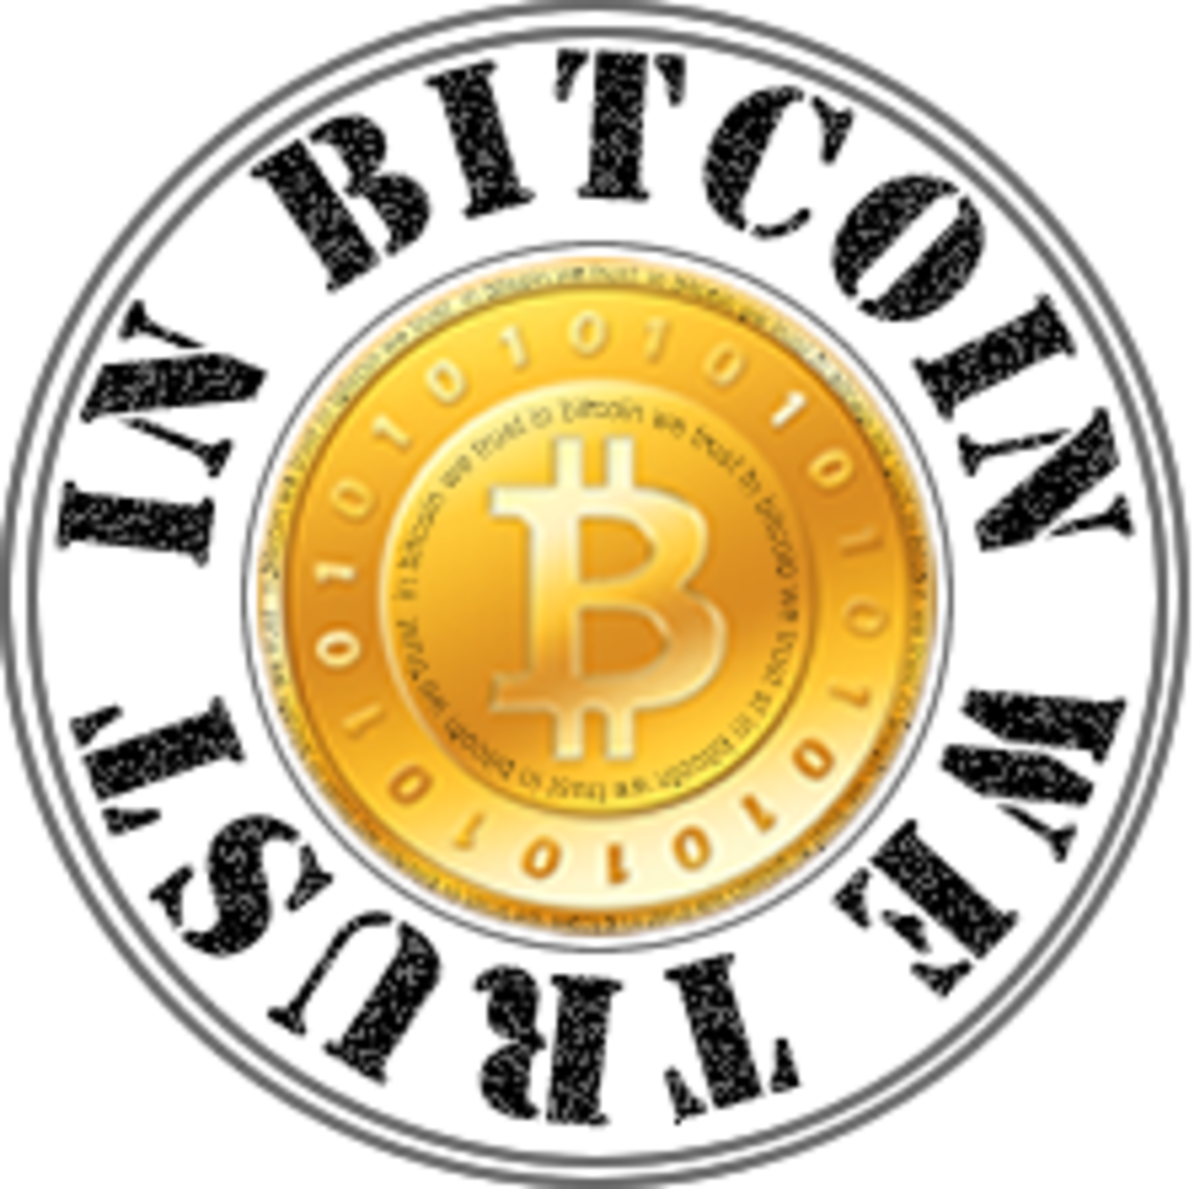 Op-ed - In Bitcoin We Trust: UK Based Platform to Launch